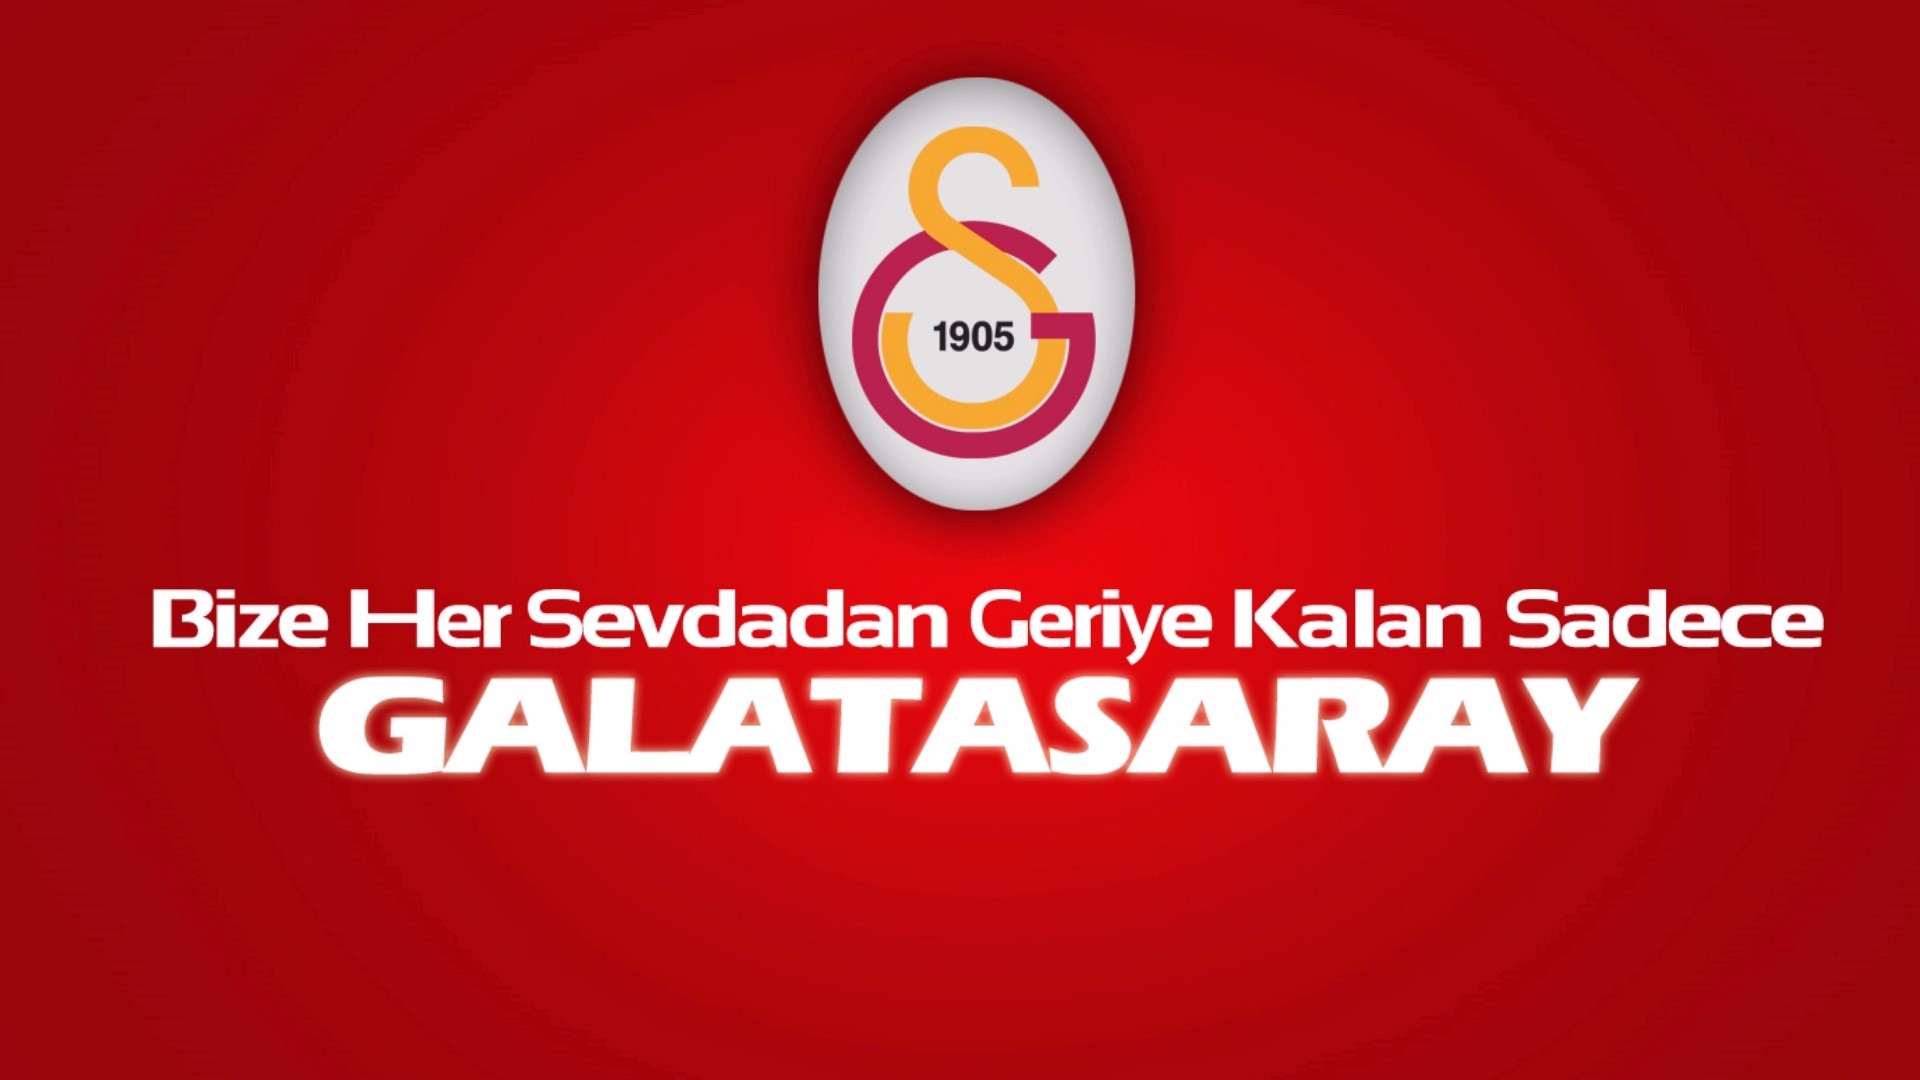 Galatasaray S.K. Wallpaper